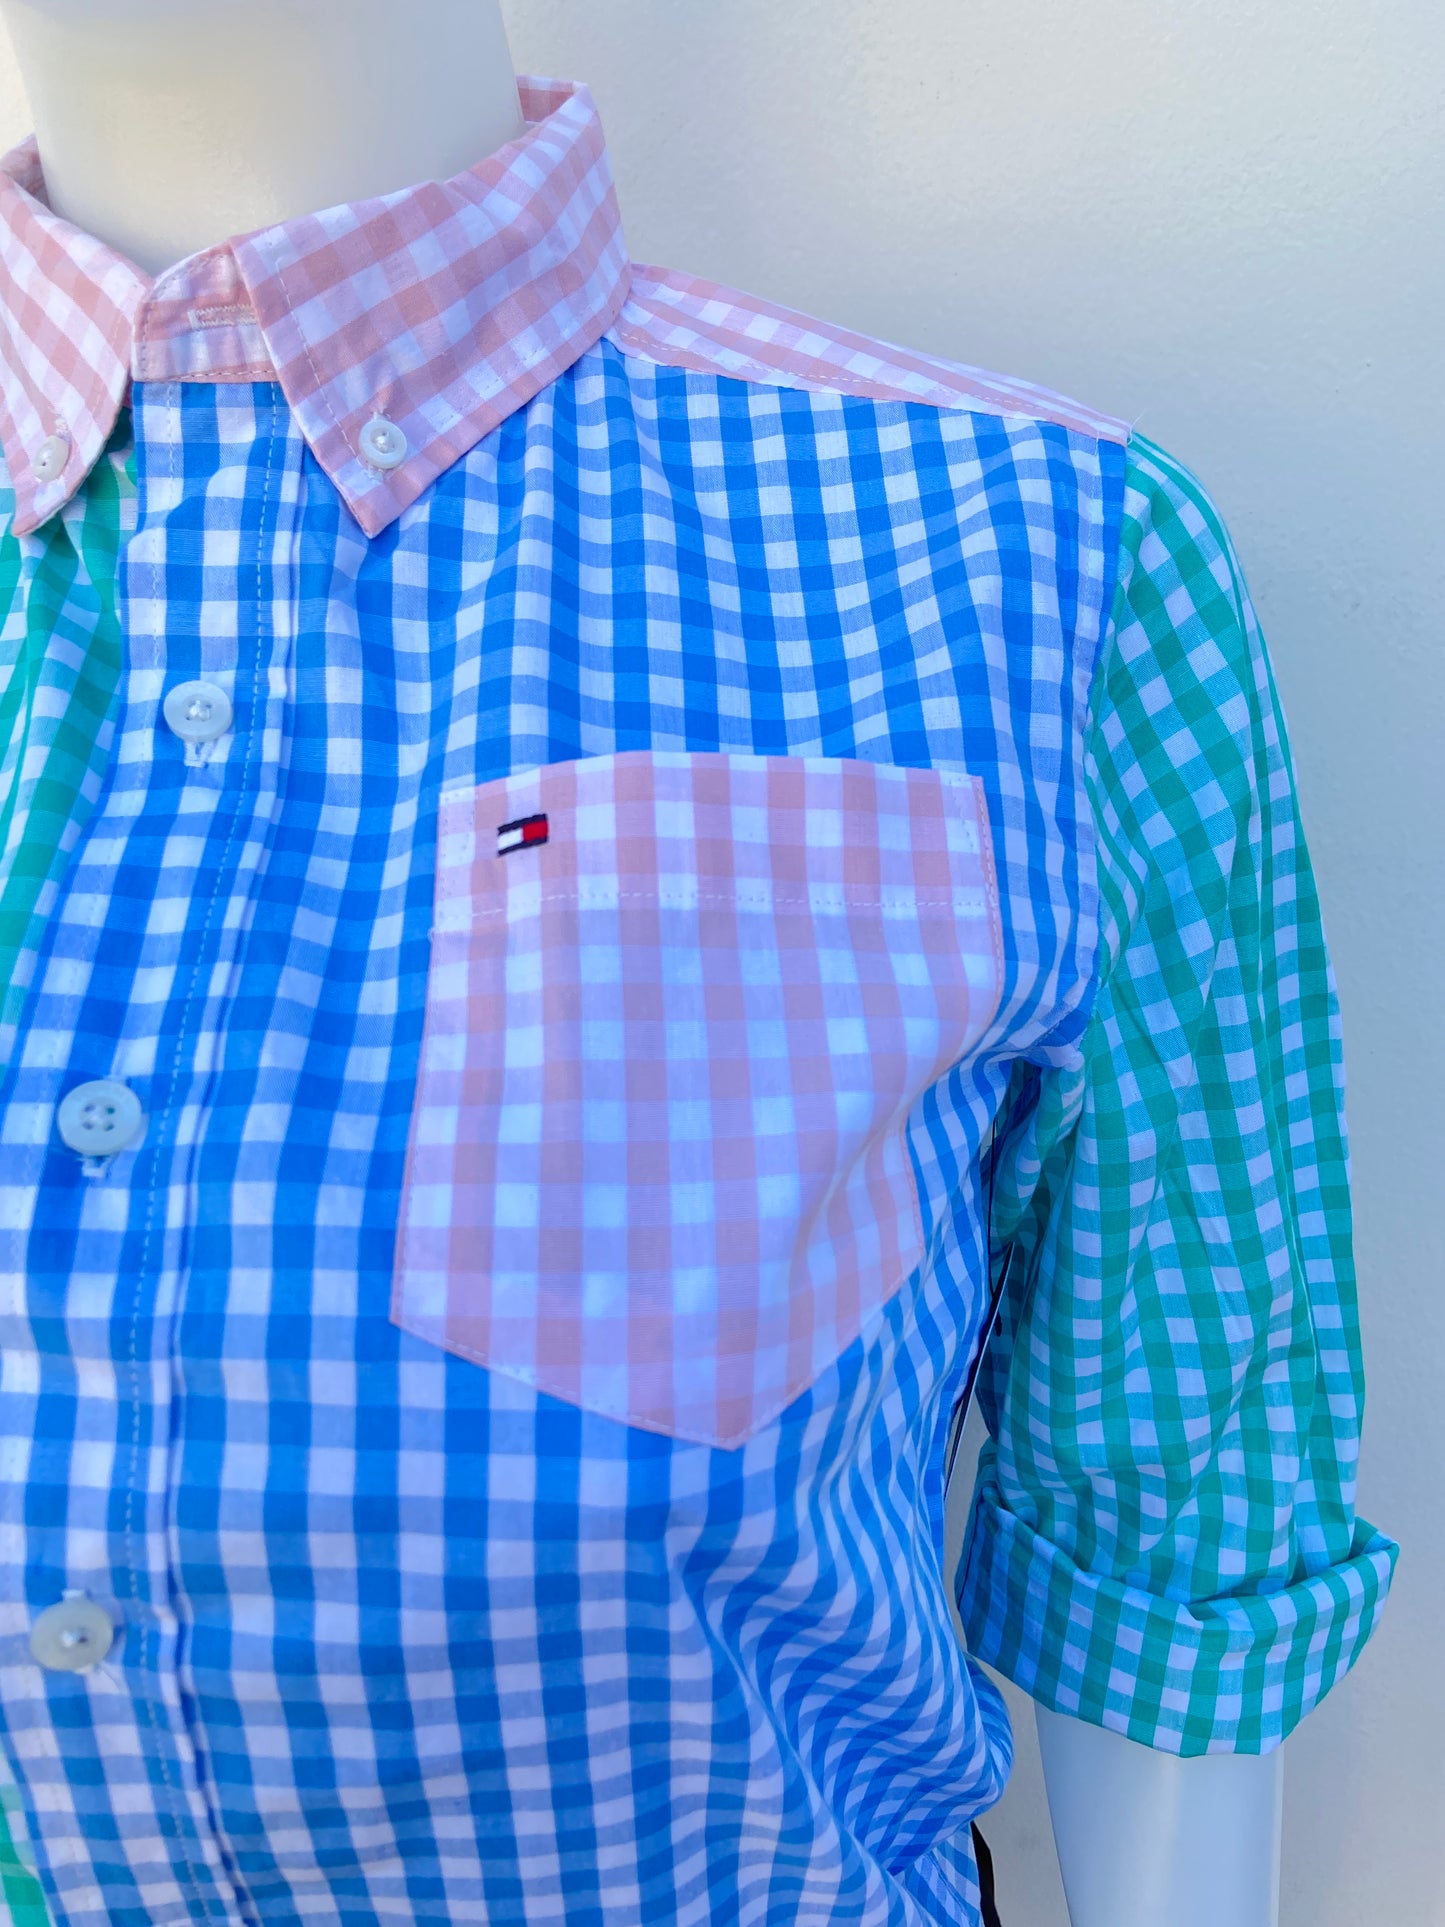 Camisa Tommy Hilfiger original azul, verde, rosado de cuadritos.